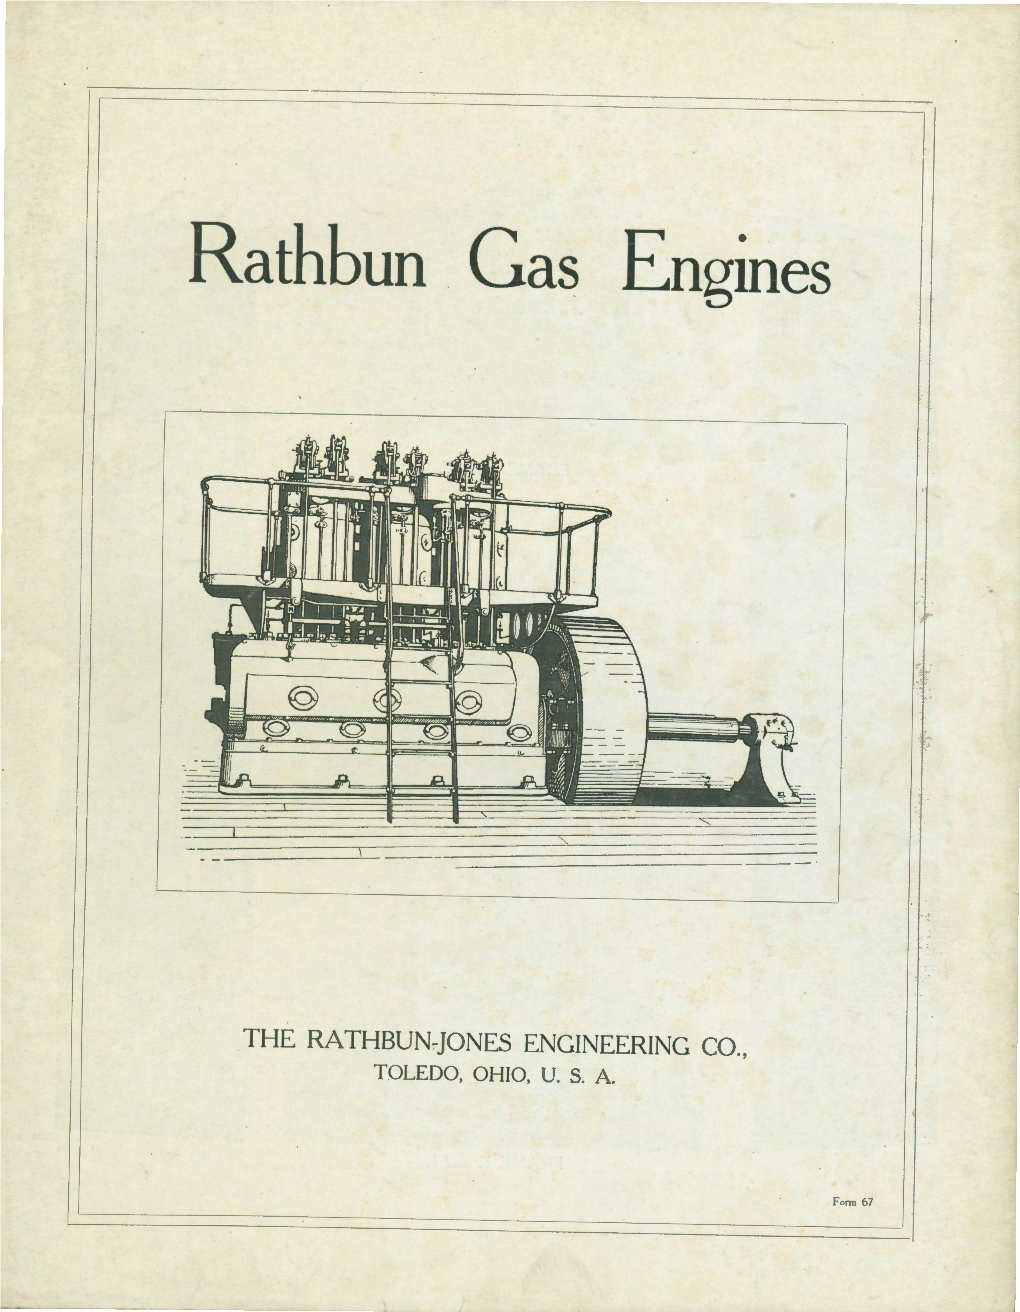 Rathbun Gas Engines